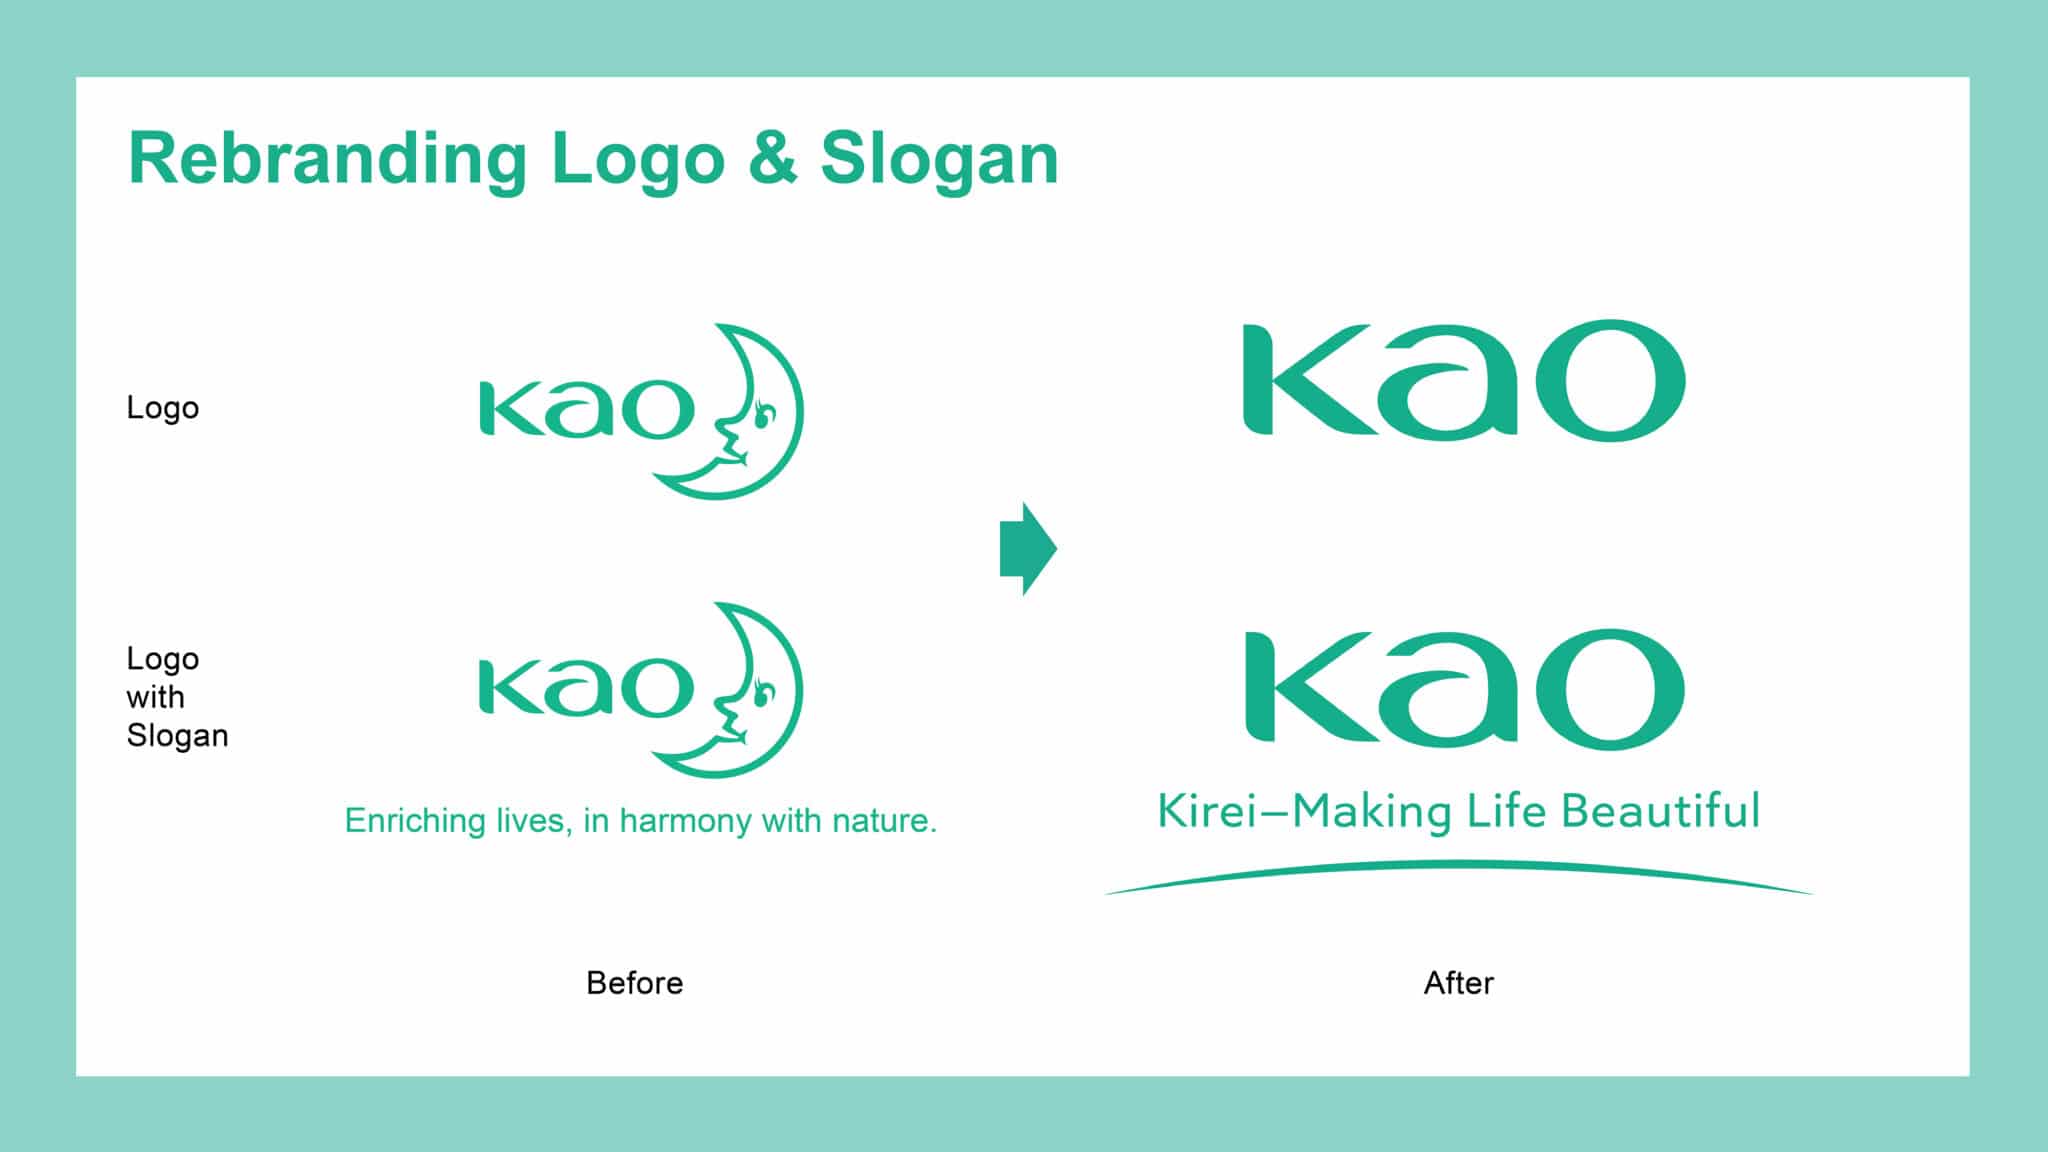 Rebranding Kao logo & slogan